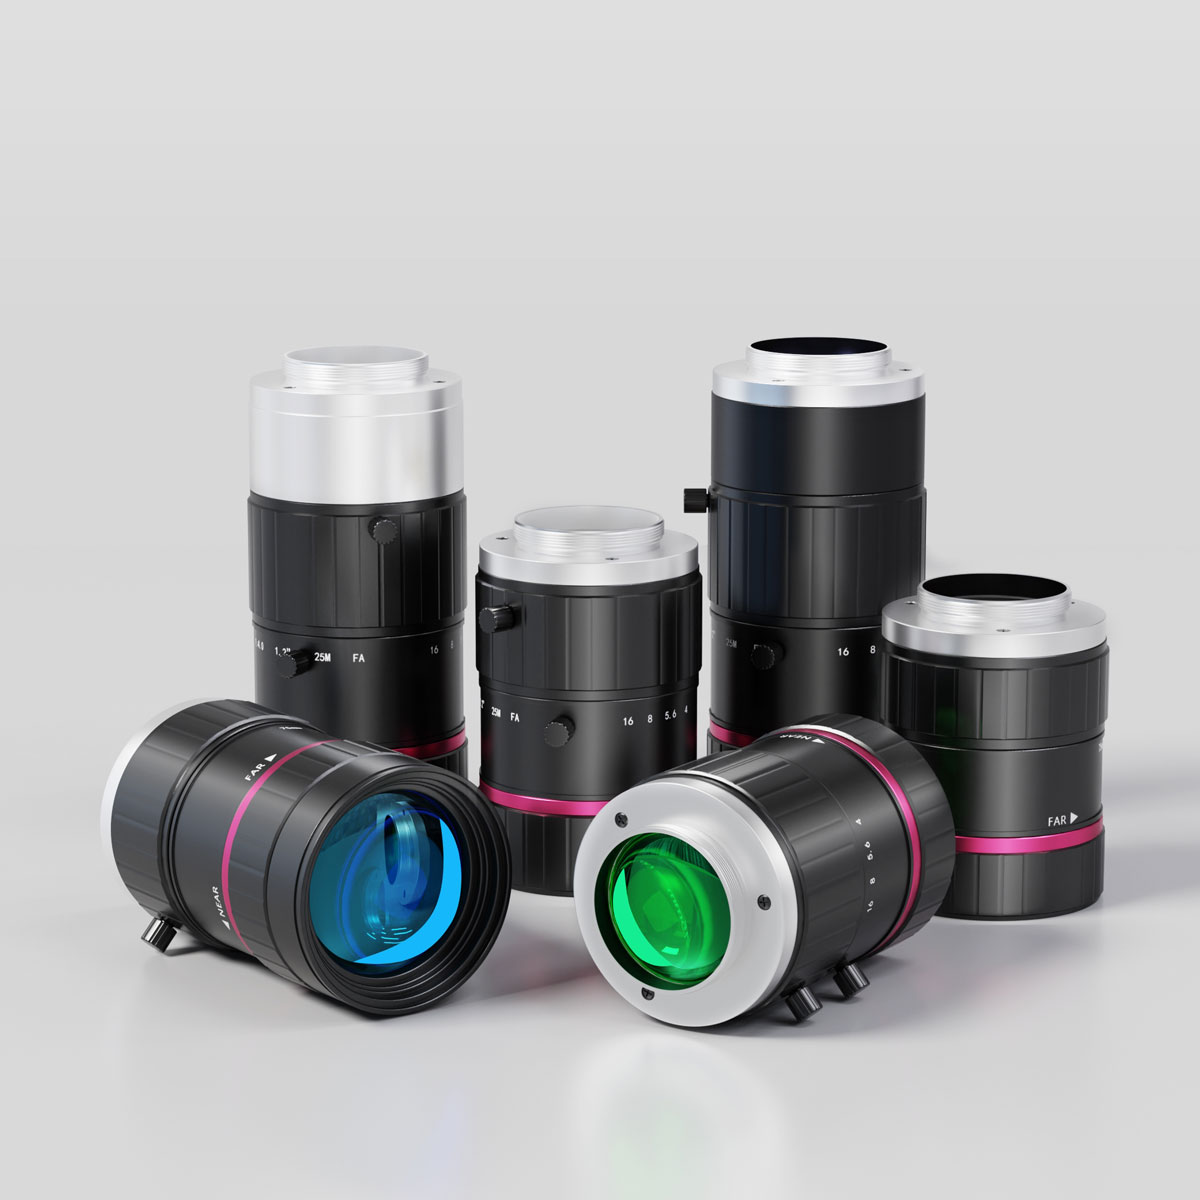 1.2" Fixed Focal Length Lenses